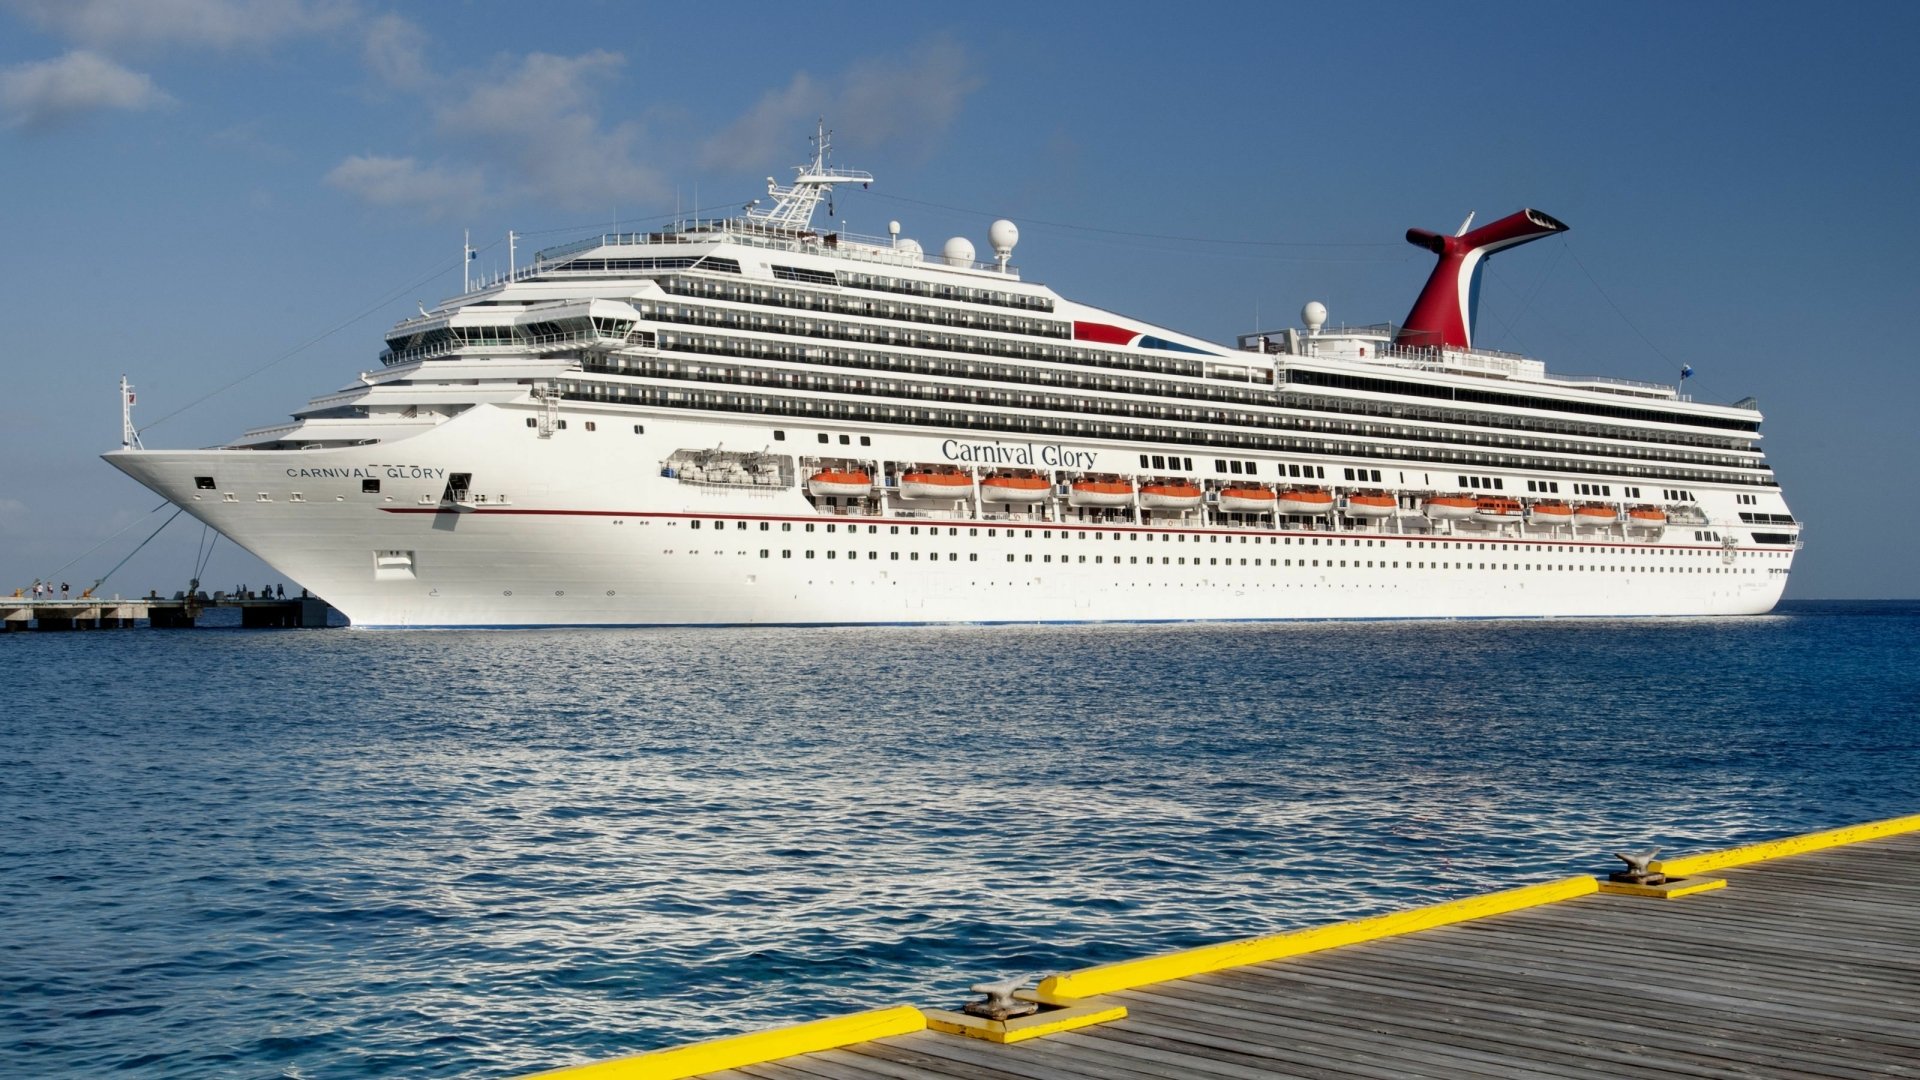 carnival cruise line ship glory